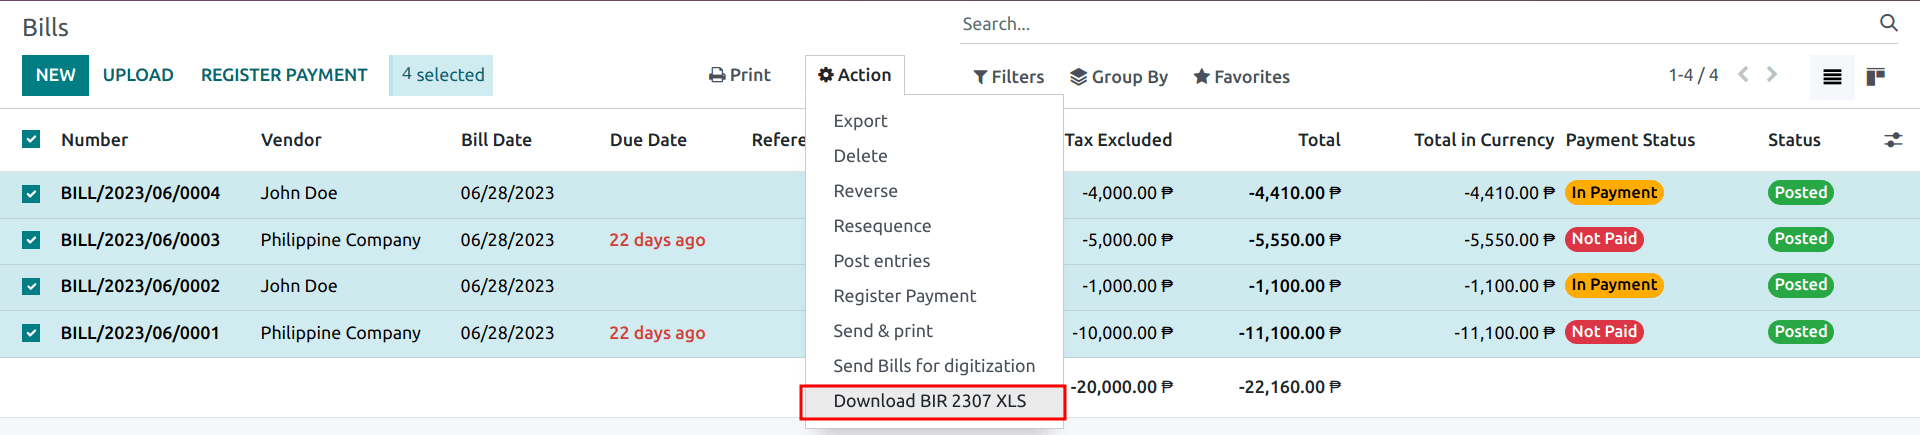 Selección de varias facturas de proveedor con la acción para "Descargar BIR 2307 XLS". 